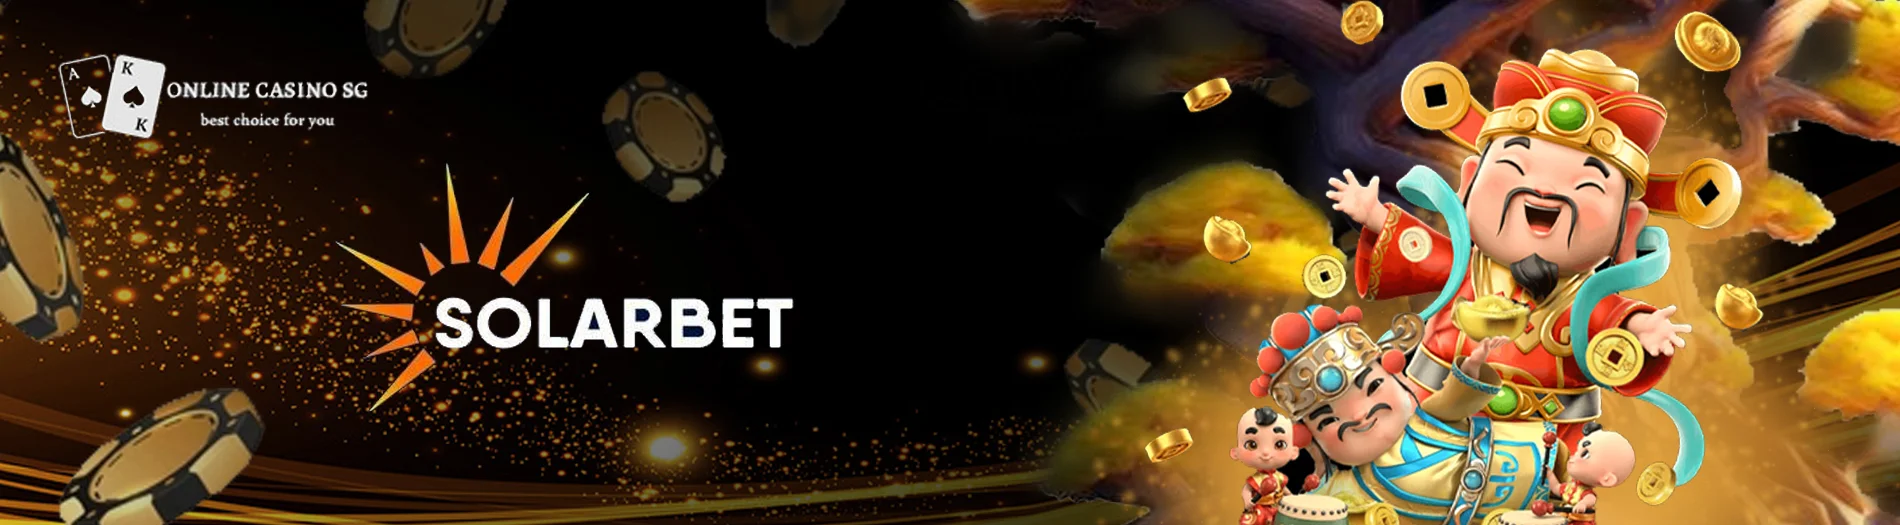 Enjoy first deposit bonuses for all casino games at Solarbet casino.